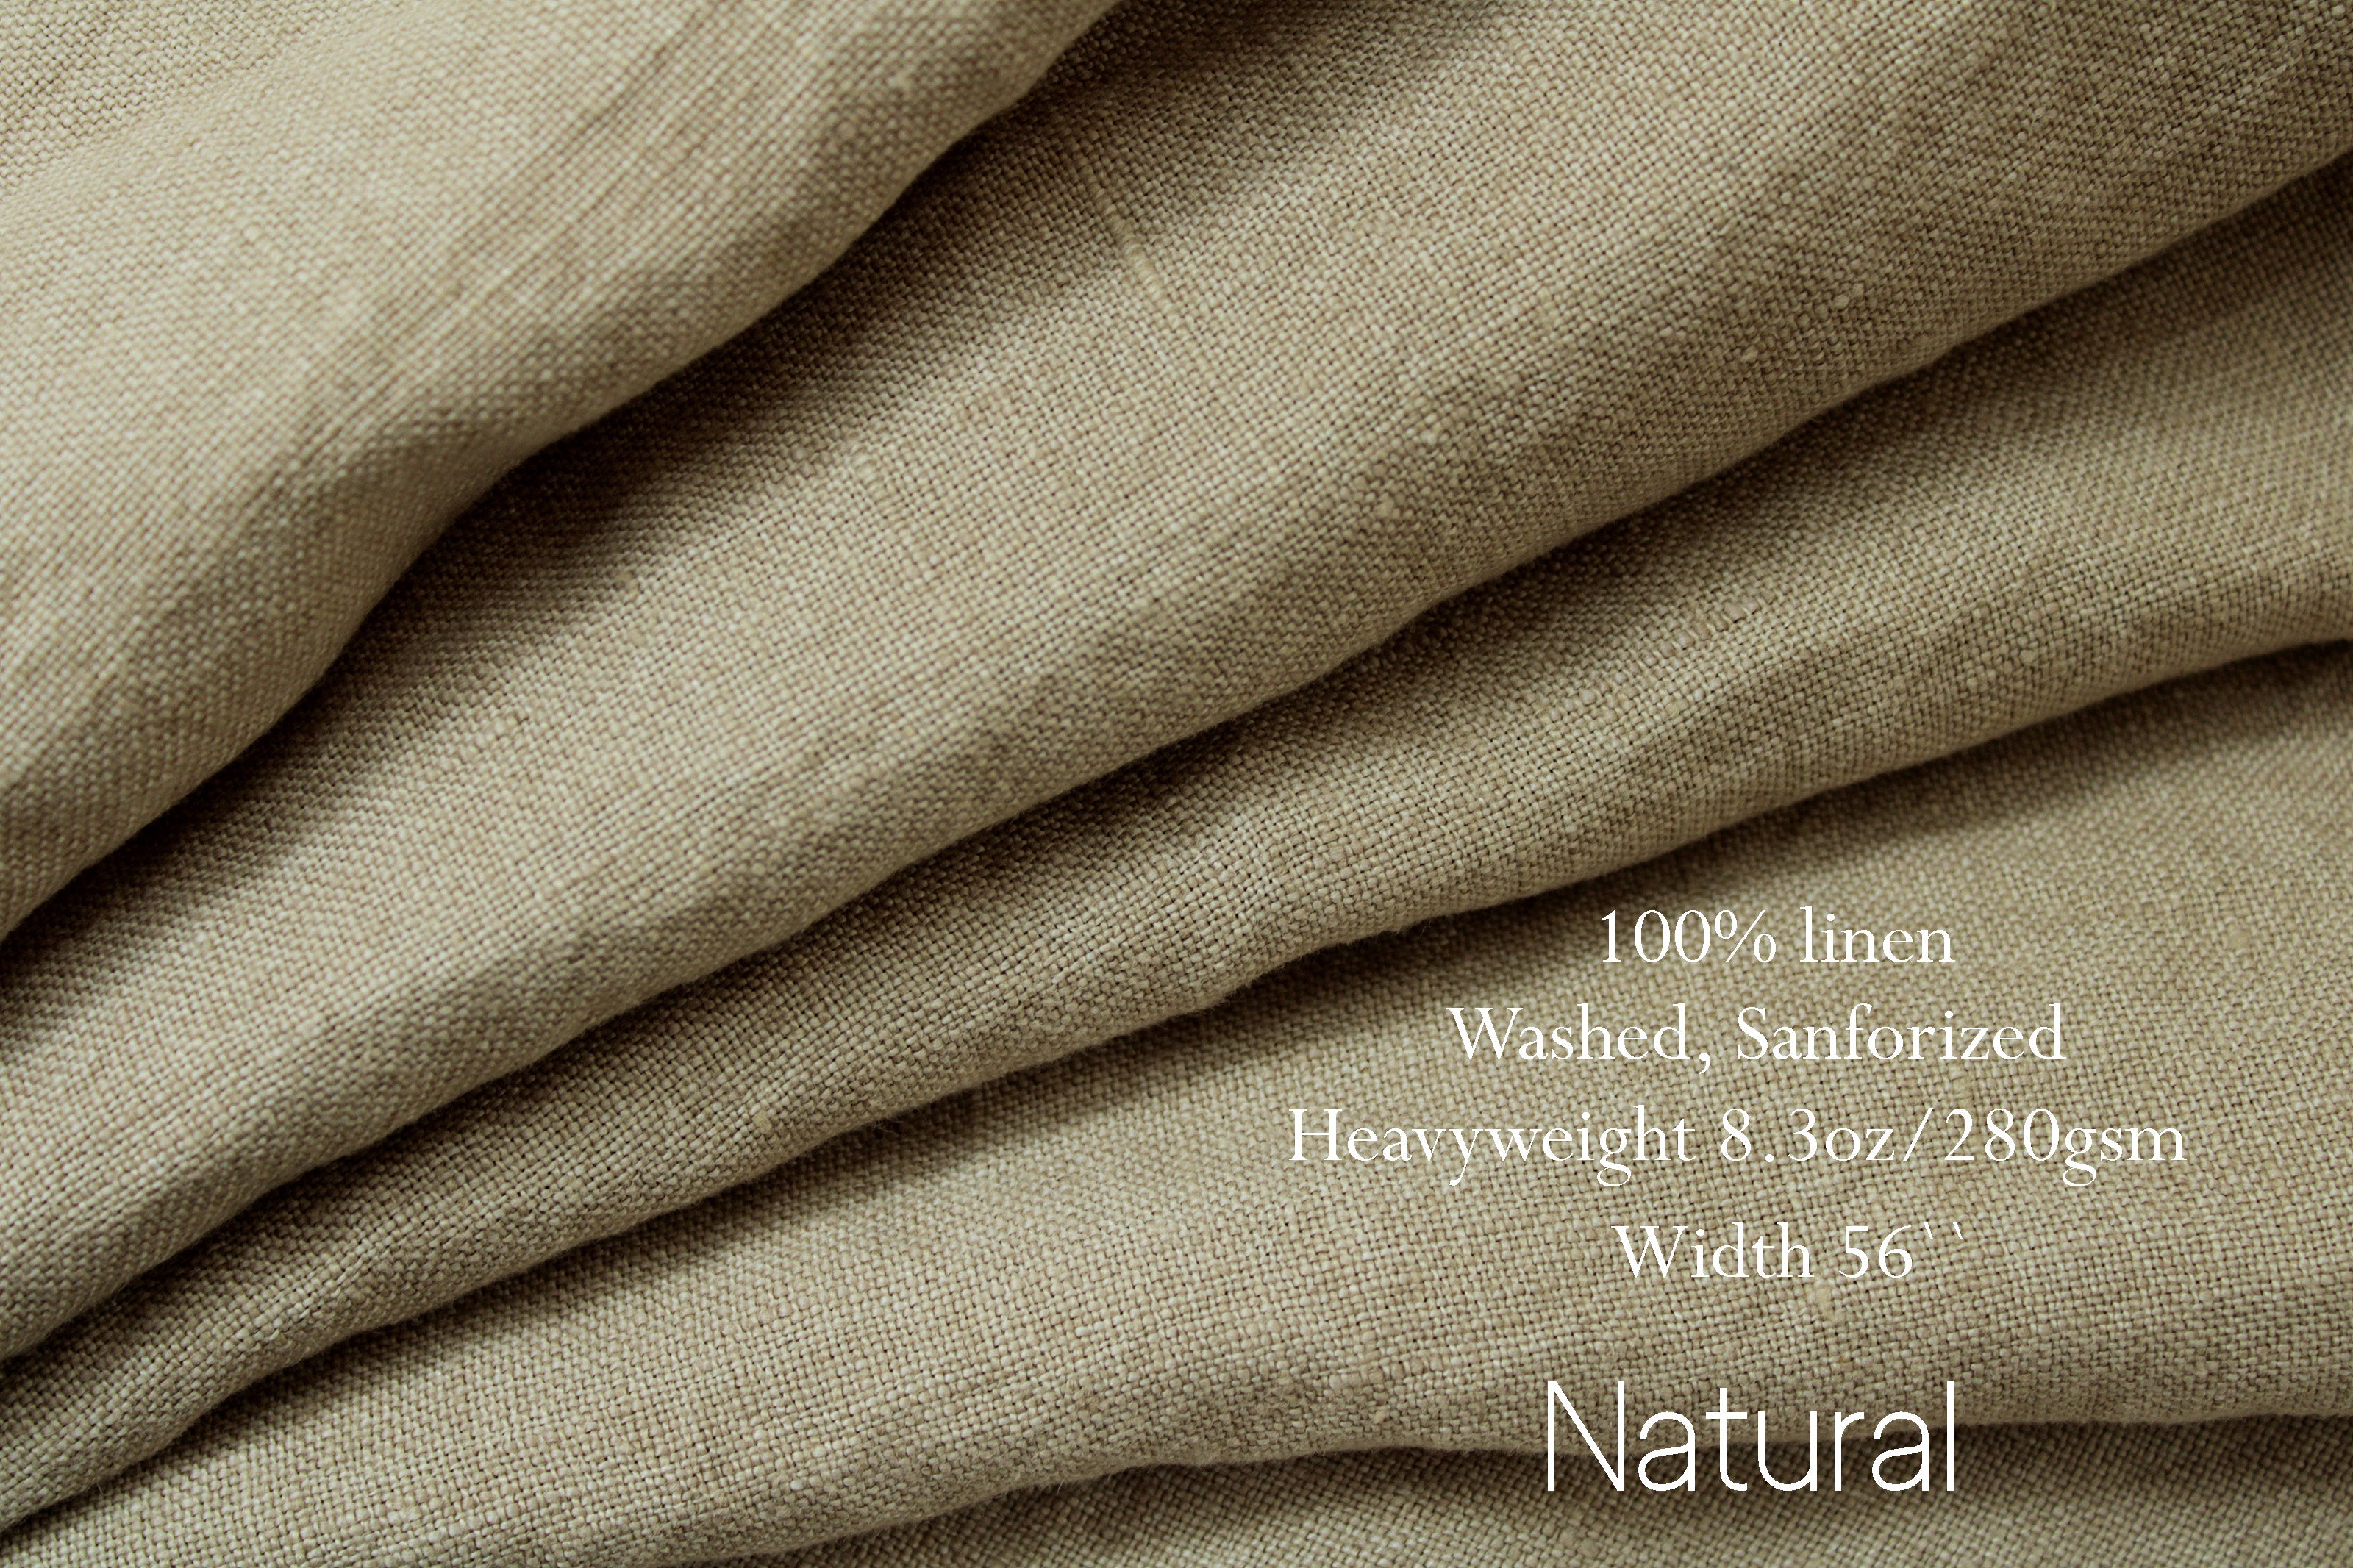 Washed Heavyweight Linen Fabric / Natural Linen Fabric